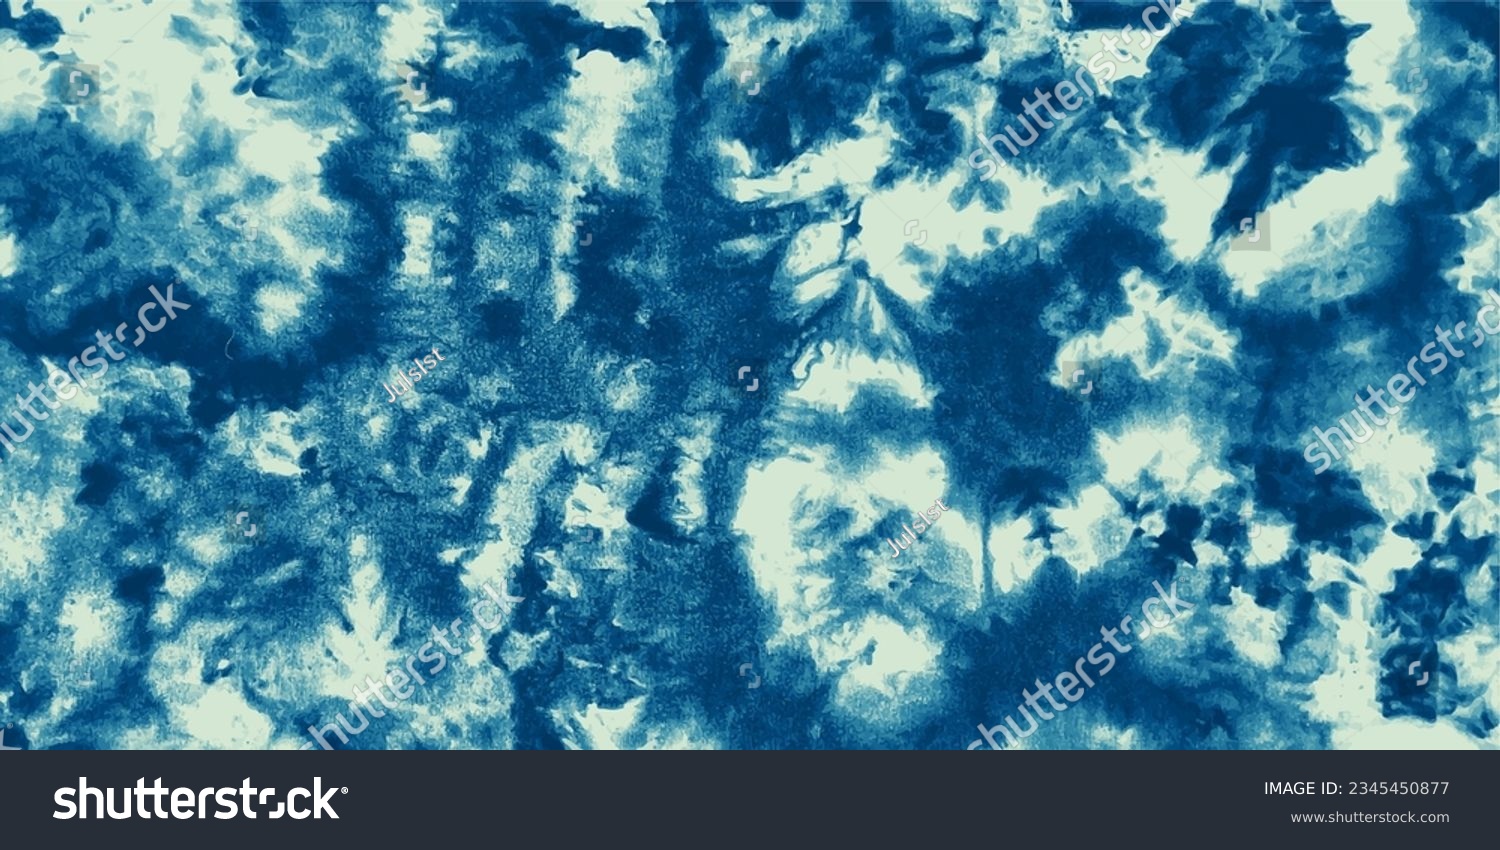 Tie dye background Geometric tradition pattern texture Vector illustration Shibori Abstract batik brush repeat fabric pattern creativity design Hand ornamental painted Dark blue, indigo #2345450877